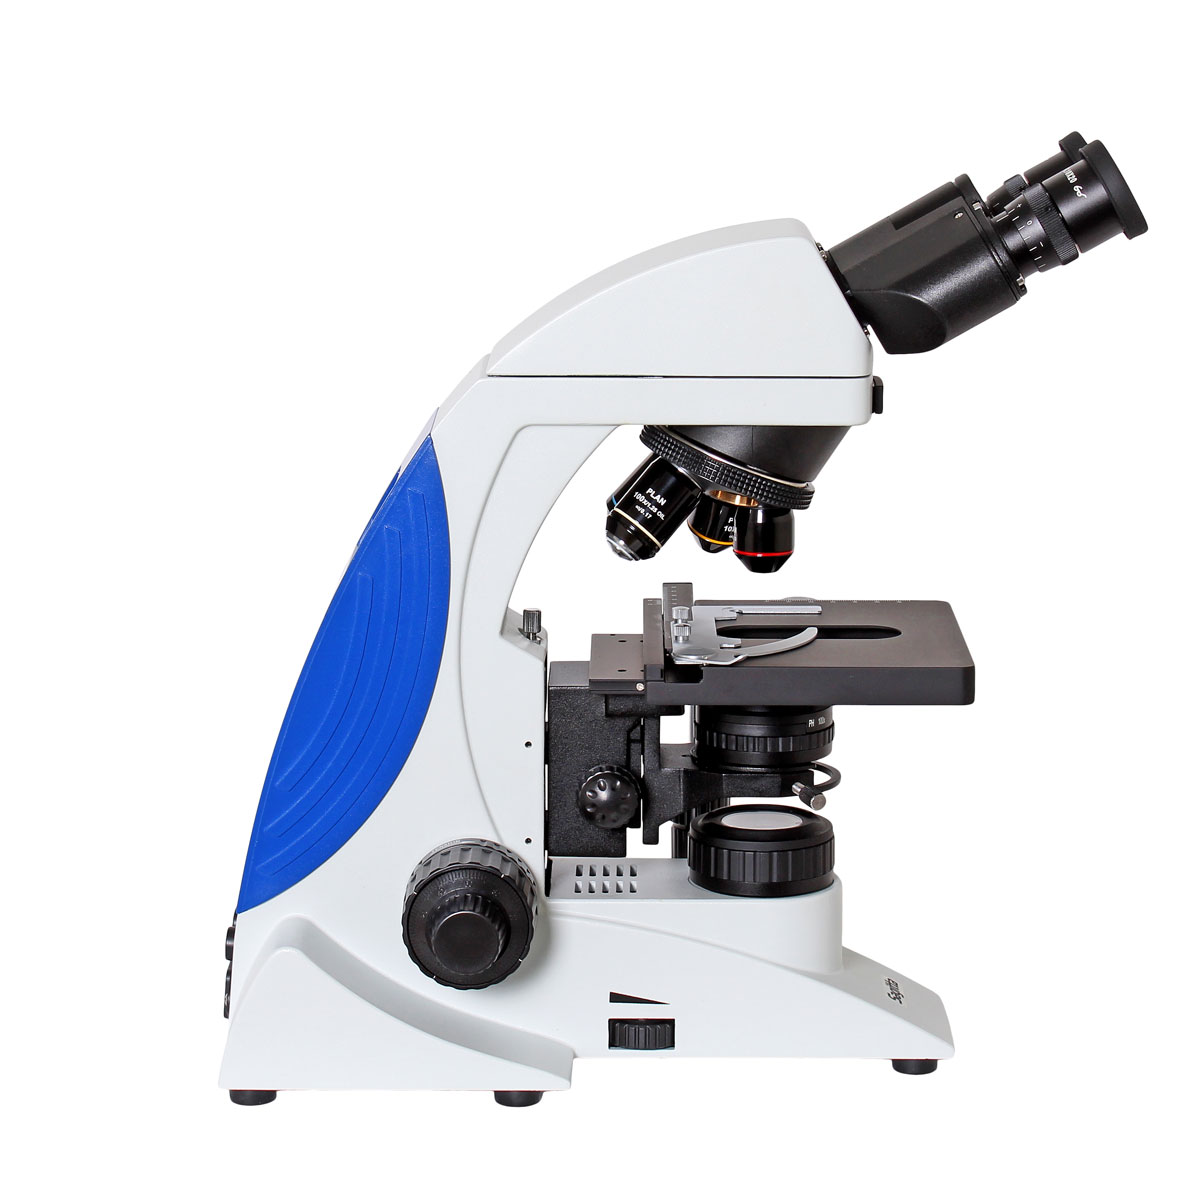 Mikroskop binokulärt SL-700